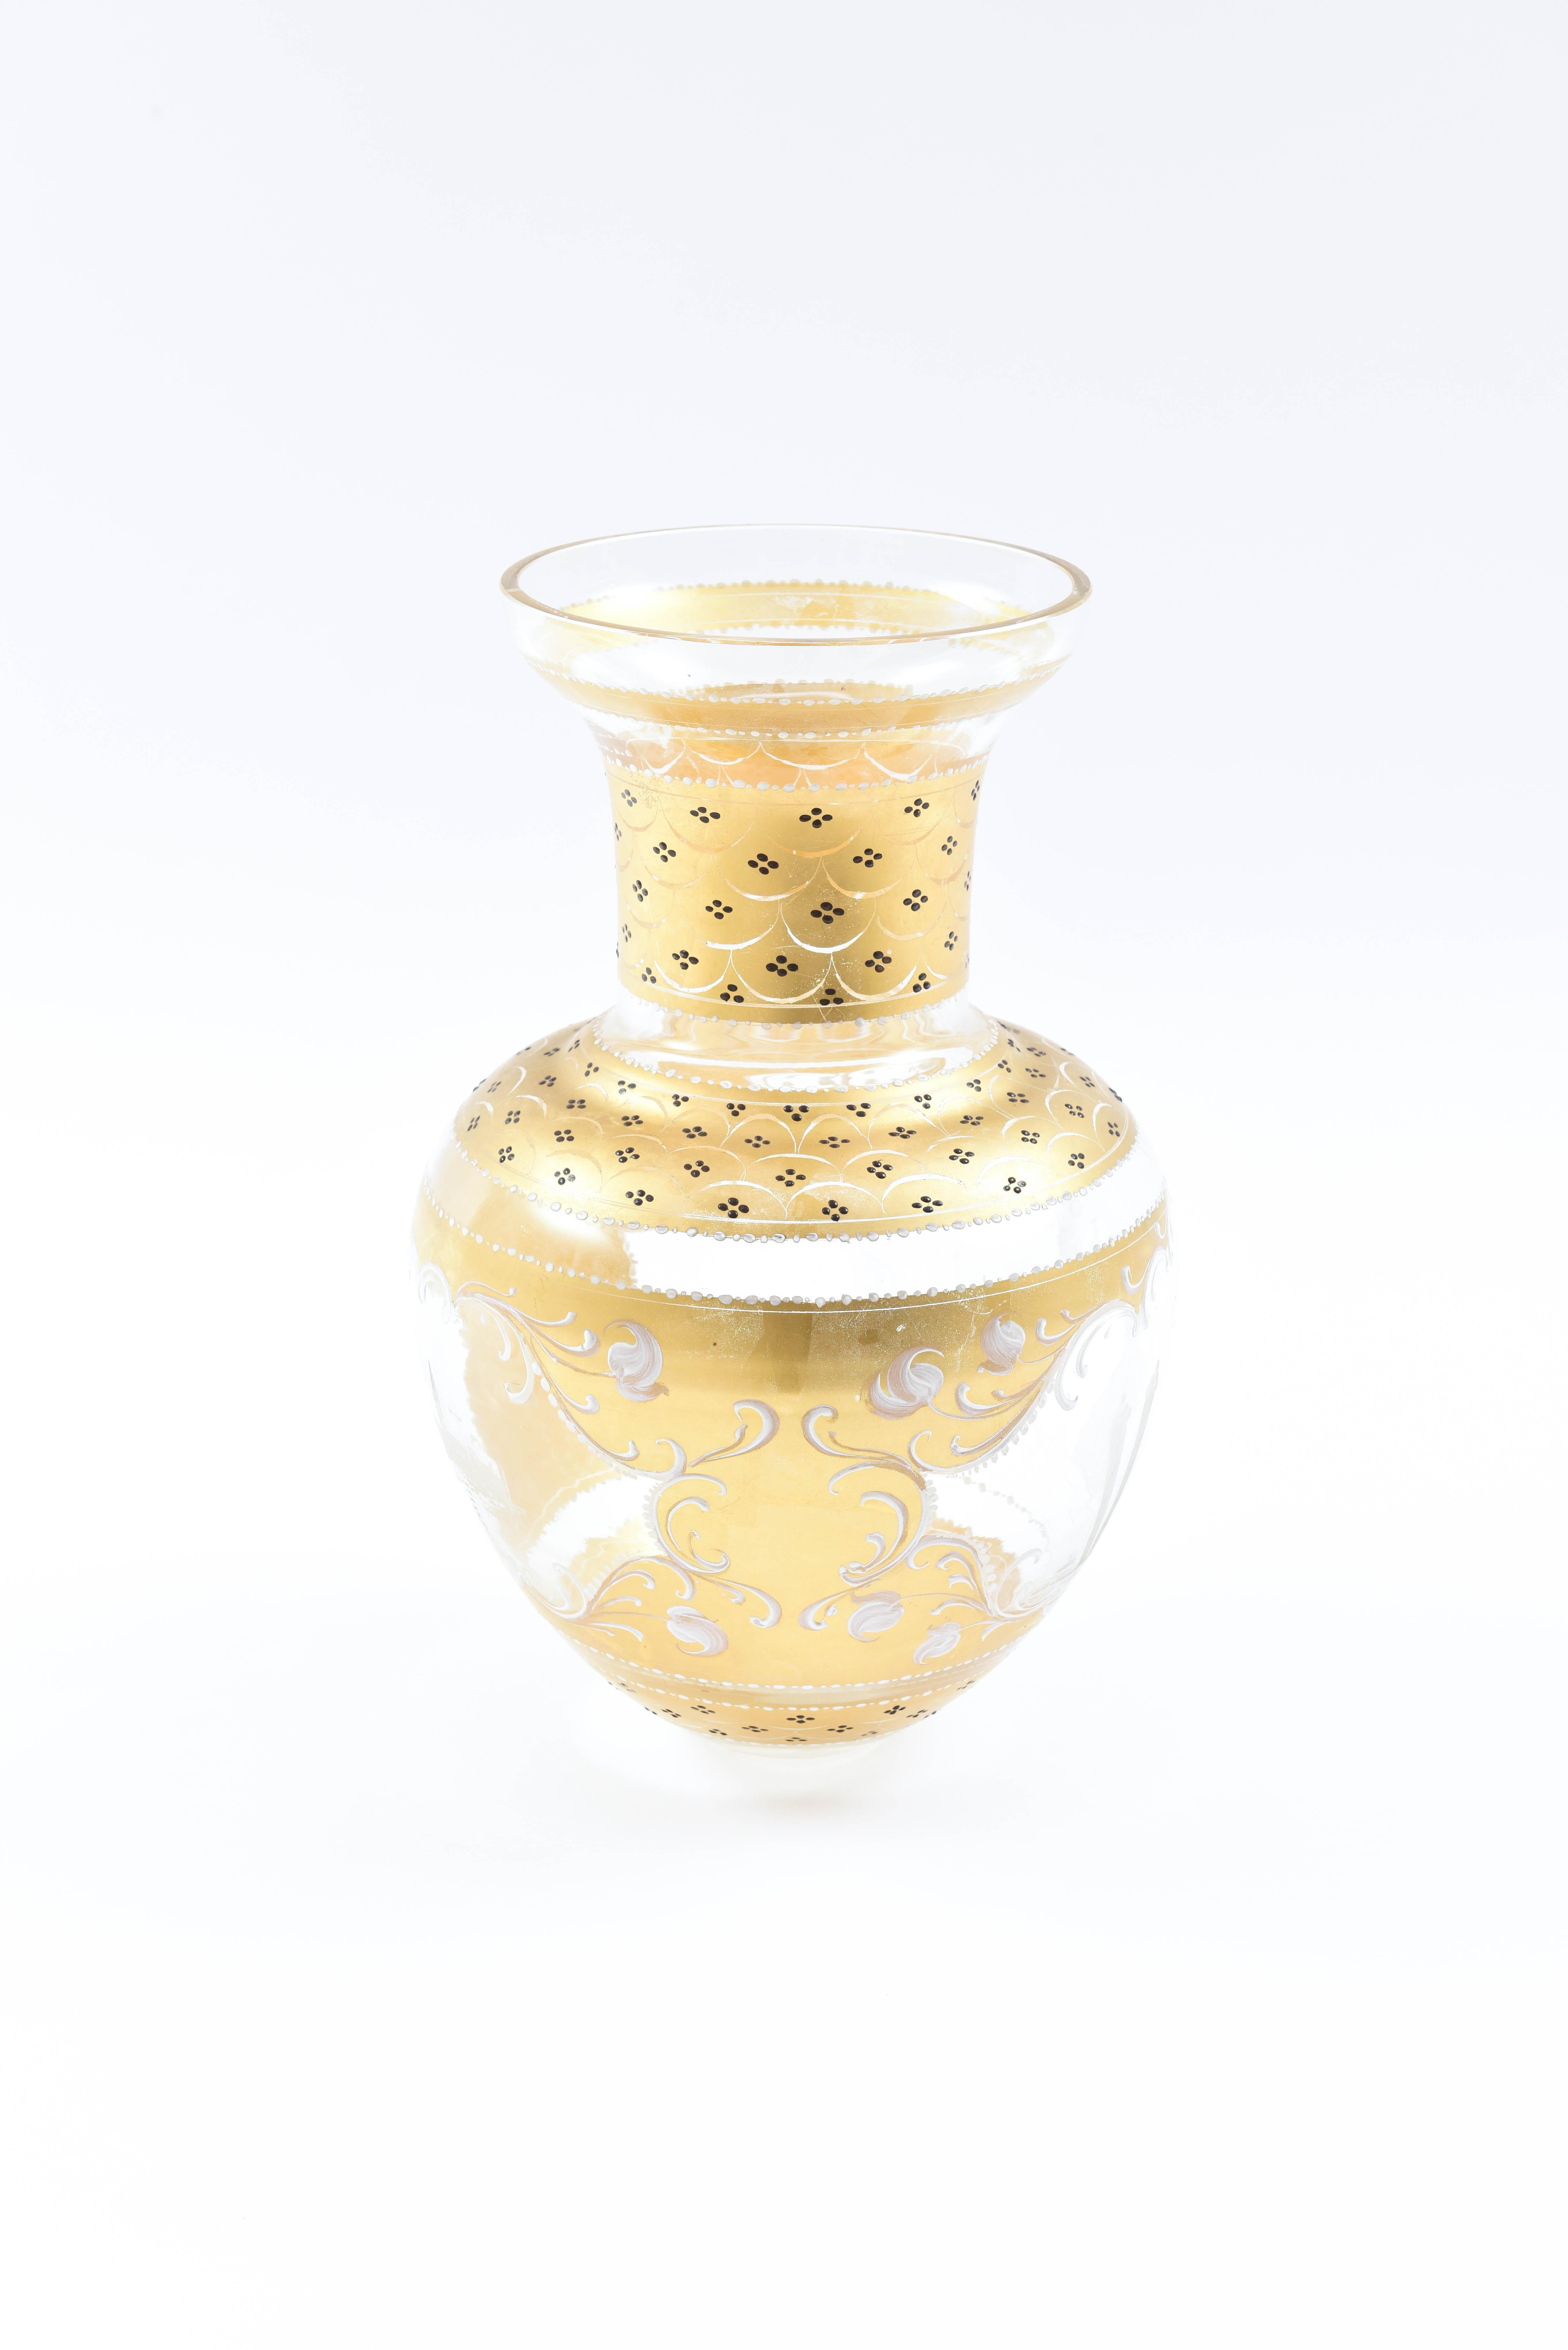 Grand Tour Tall Impressive Venetian Glass Vase with White Enamel Detail, Hand Engraving